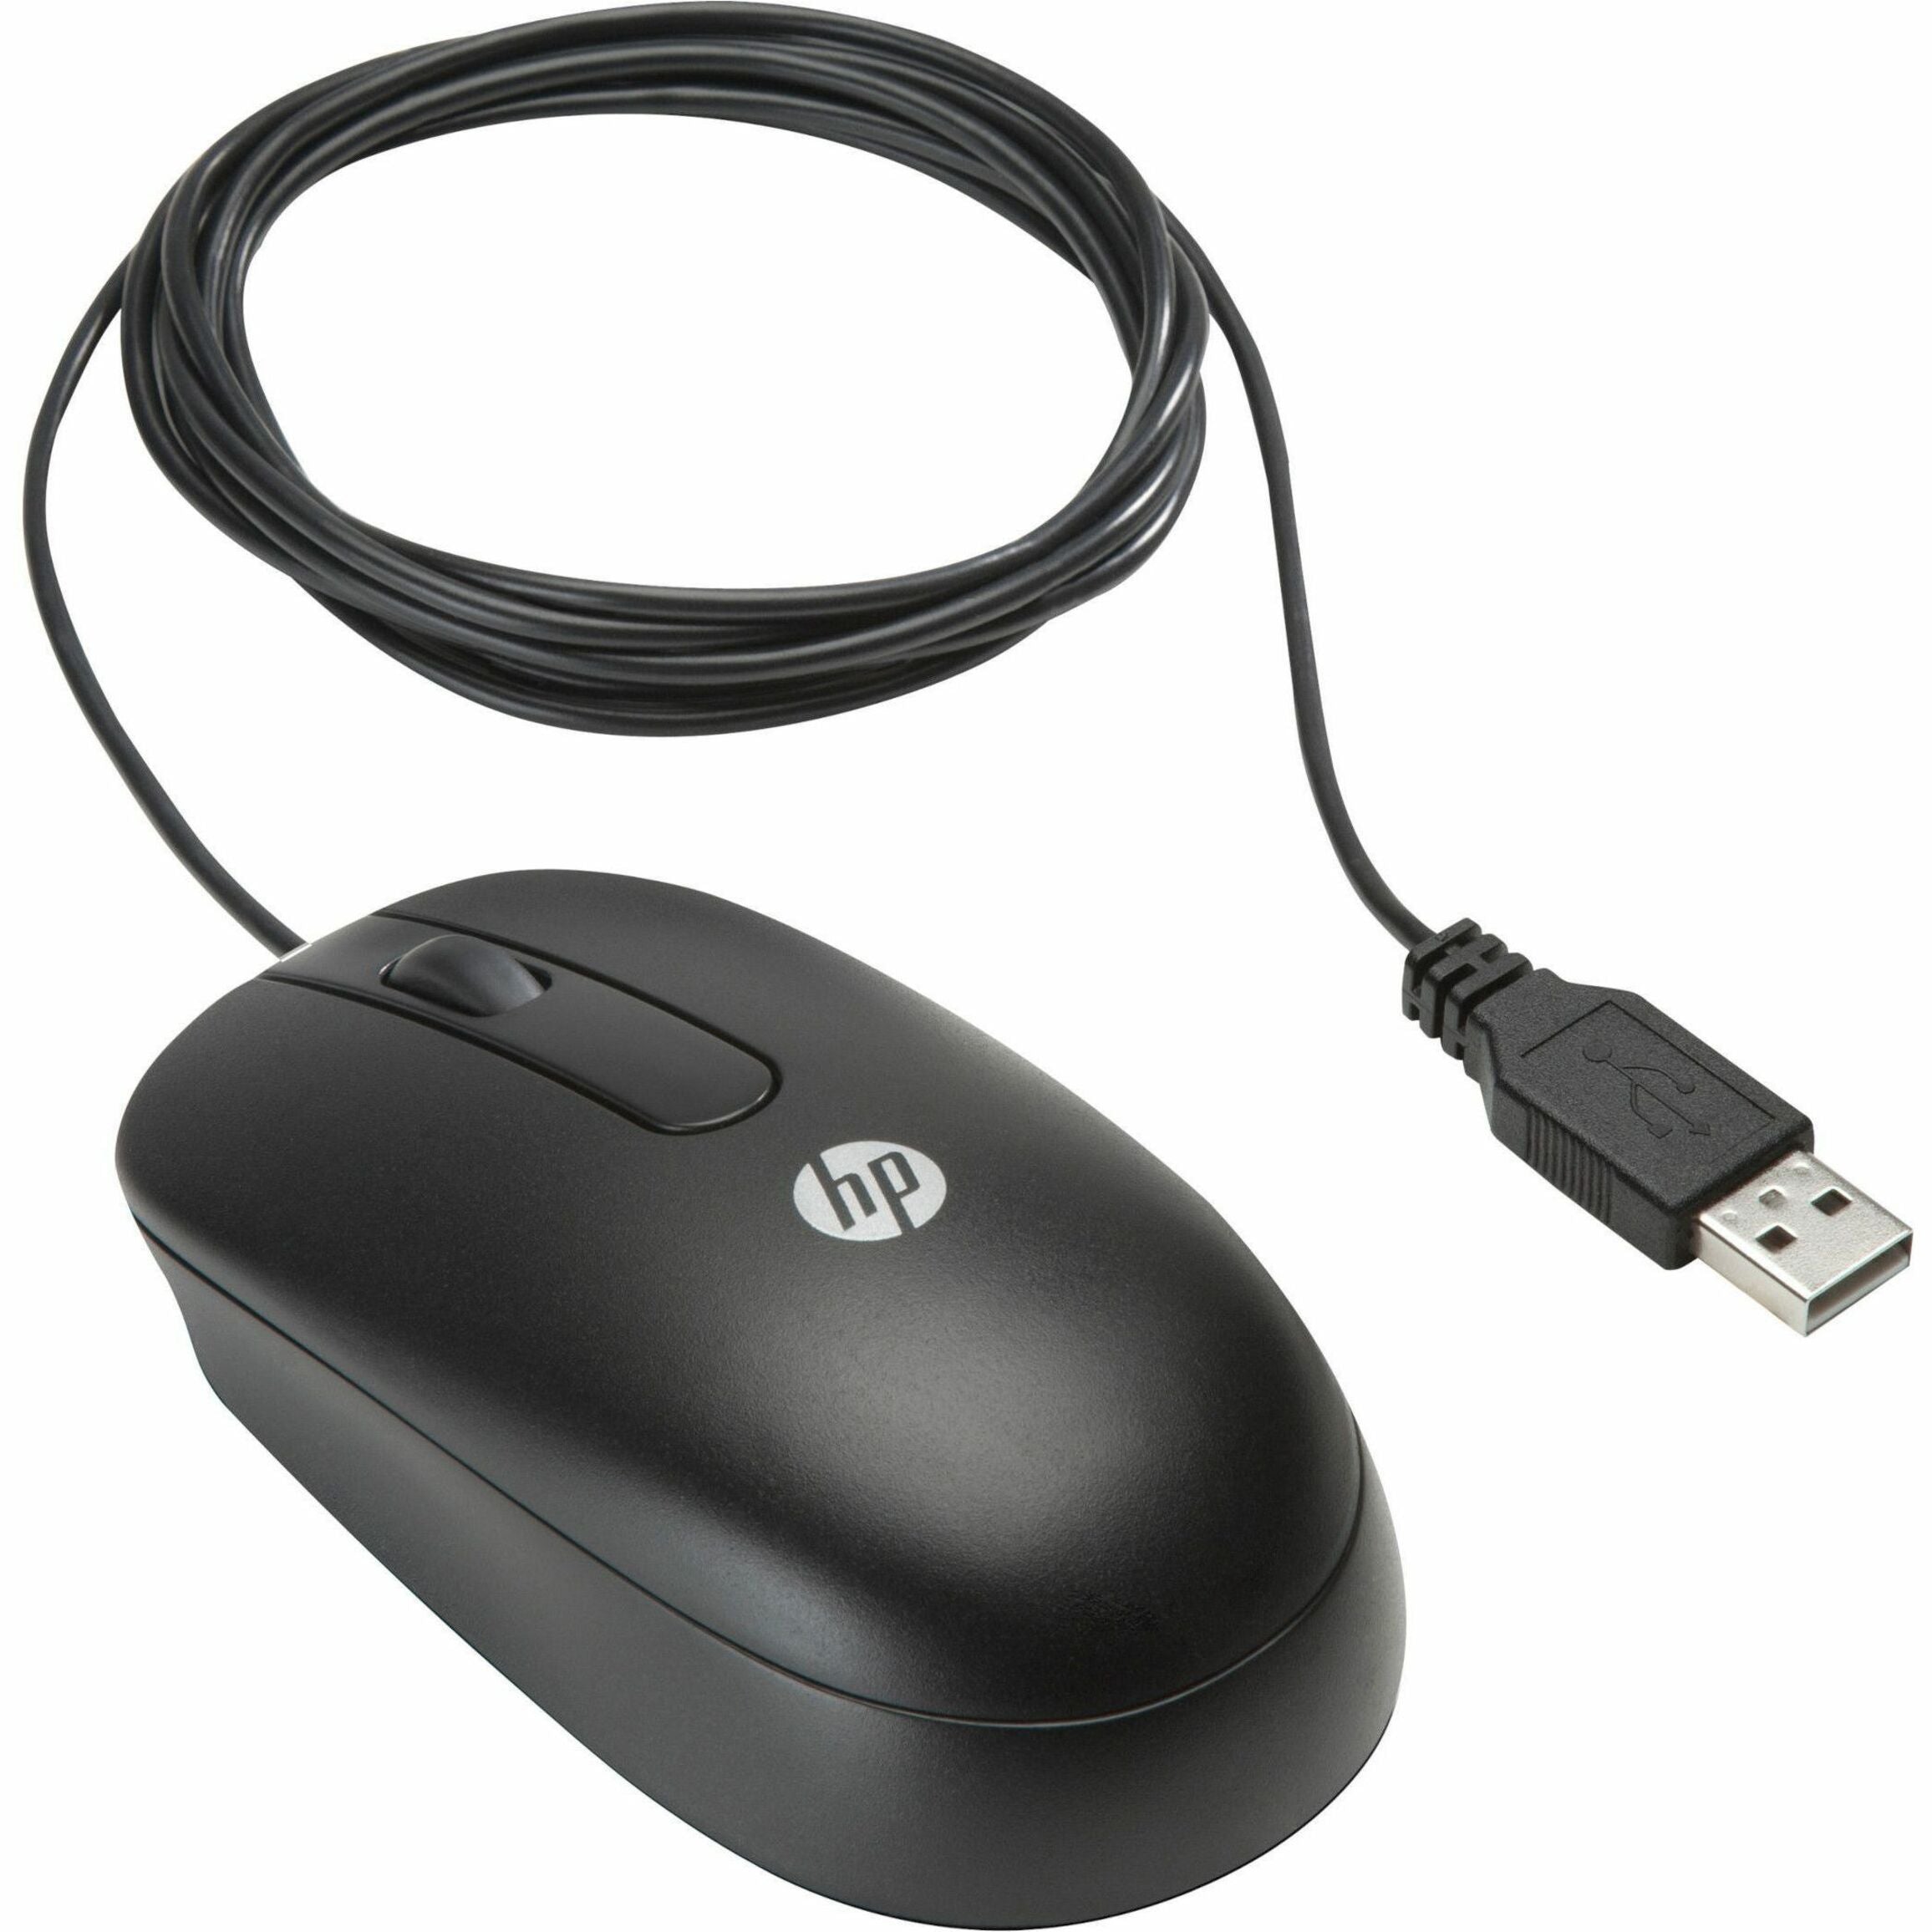 HPI SOURCING - NEW QY777AA USB Mouse, Symmetrical Design, Optical Sensor, 800 DPI